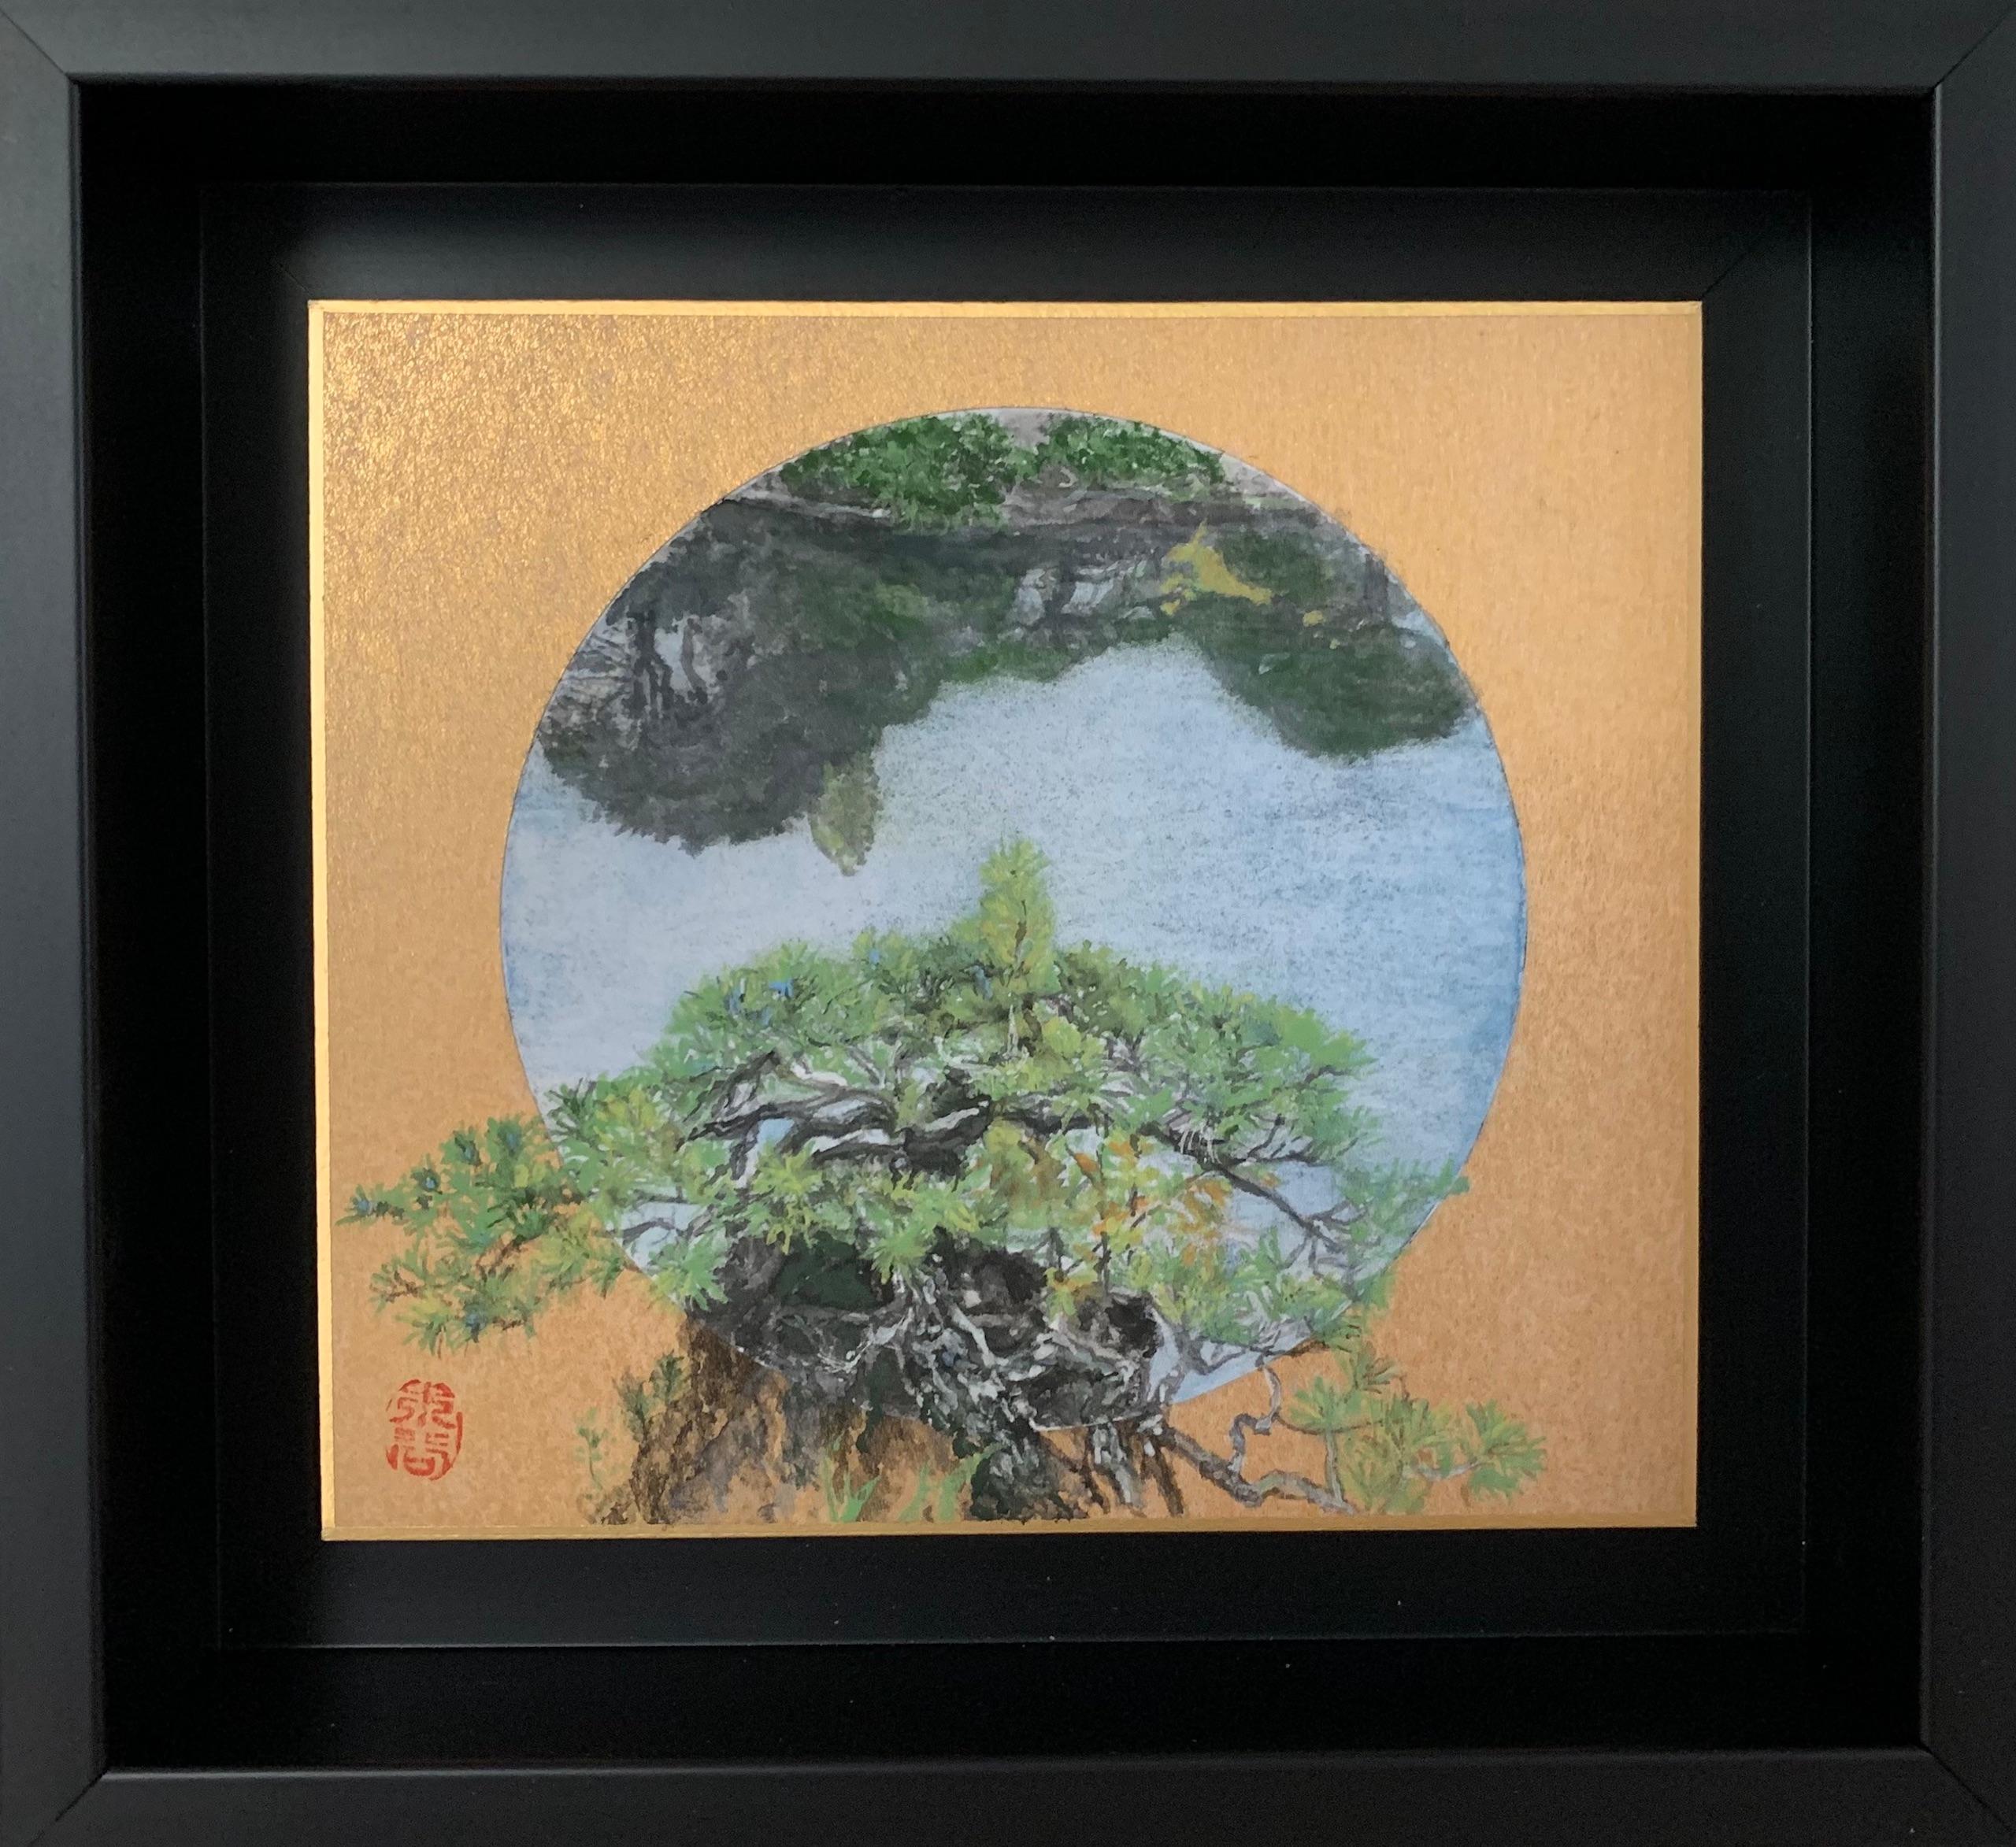 The other shore by Lumi Mizutani - Japanische Landschaftsmalerei, Gold, Pigmente